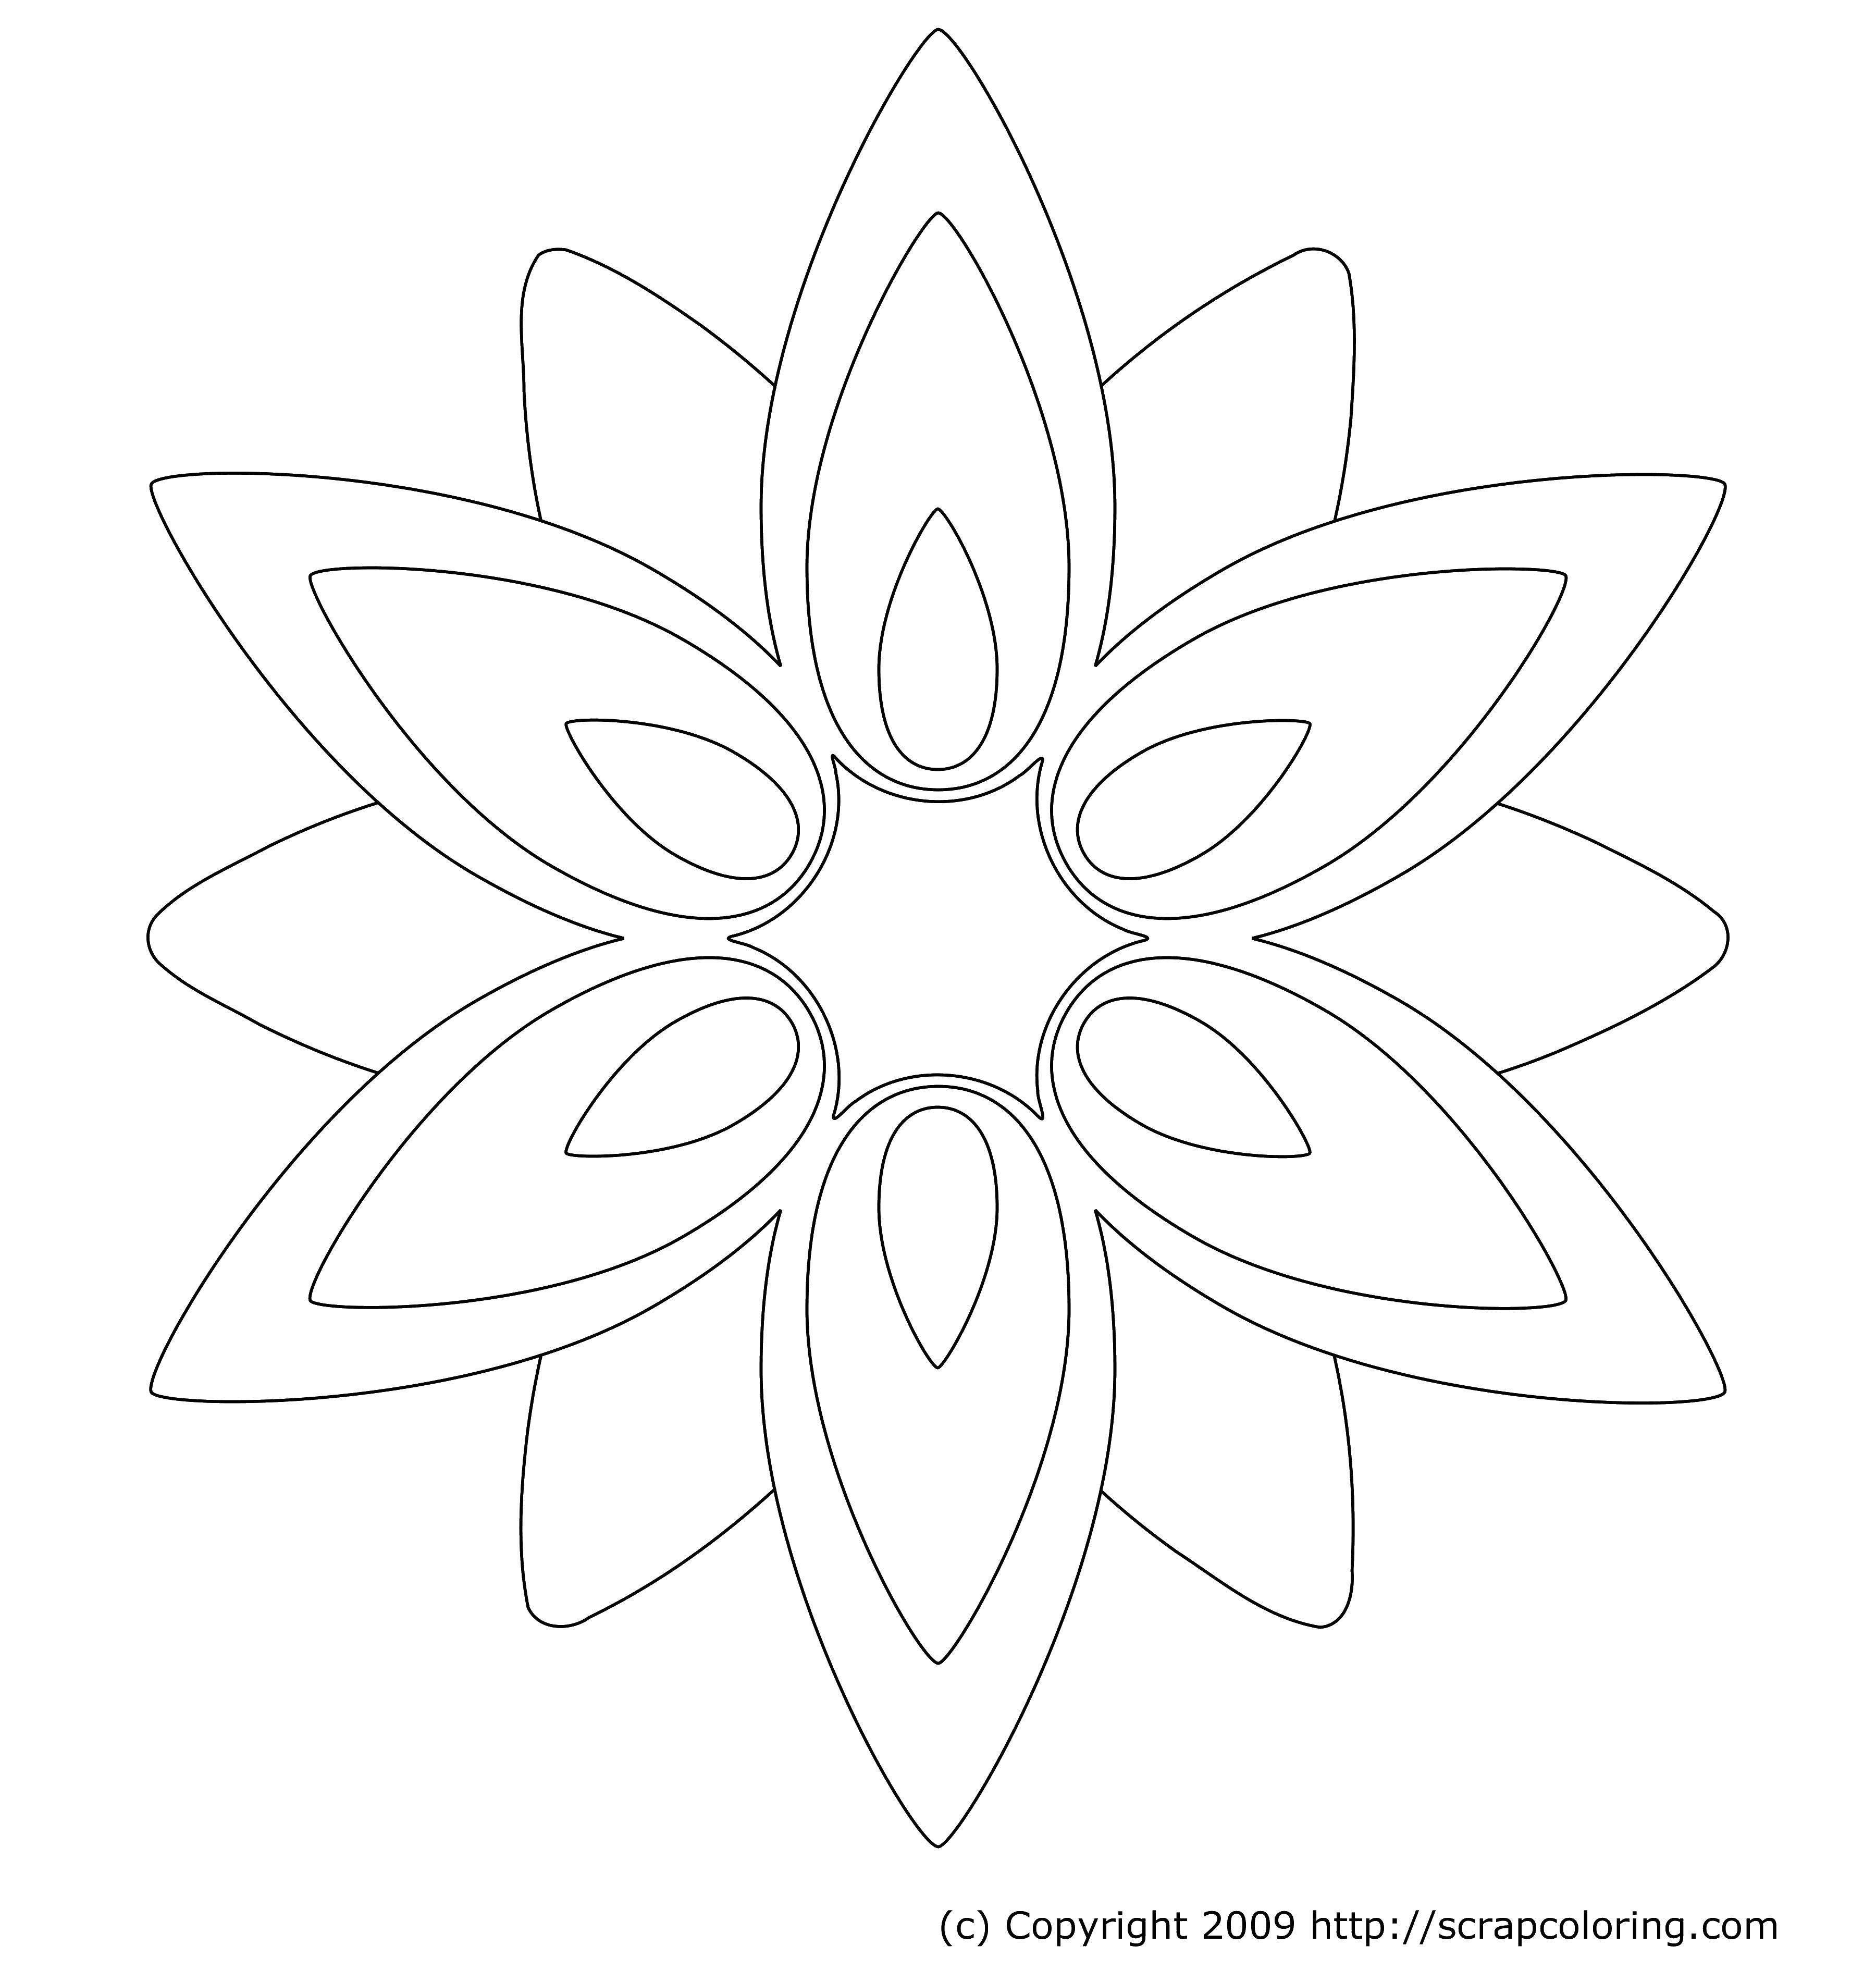 Coloring Flower Lotus. Category flowers. Tags:  flowers, petals, Lotus.